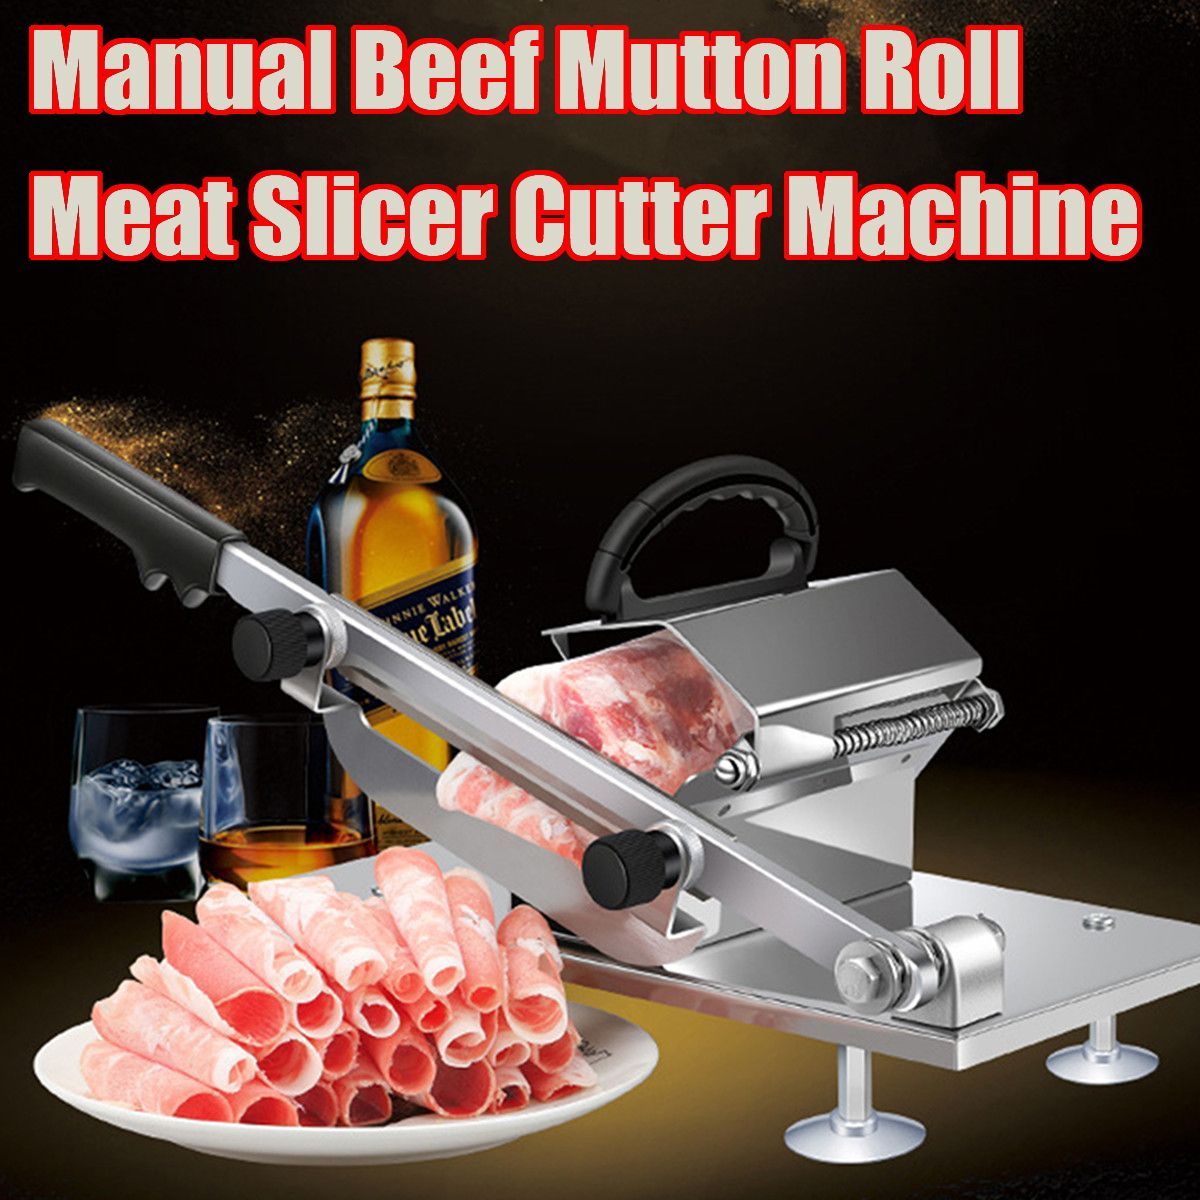 Household-Meat-Slicer-Manual-Frozen-Meat-Slicer-Cutter-Beef-Mutton-Sheet-Slicing-Machine-1380626